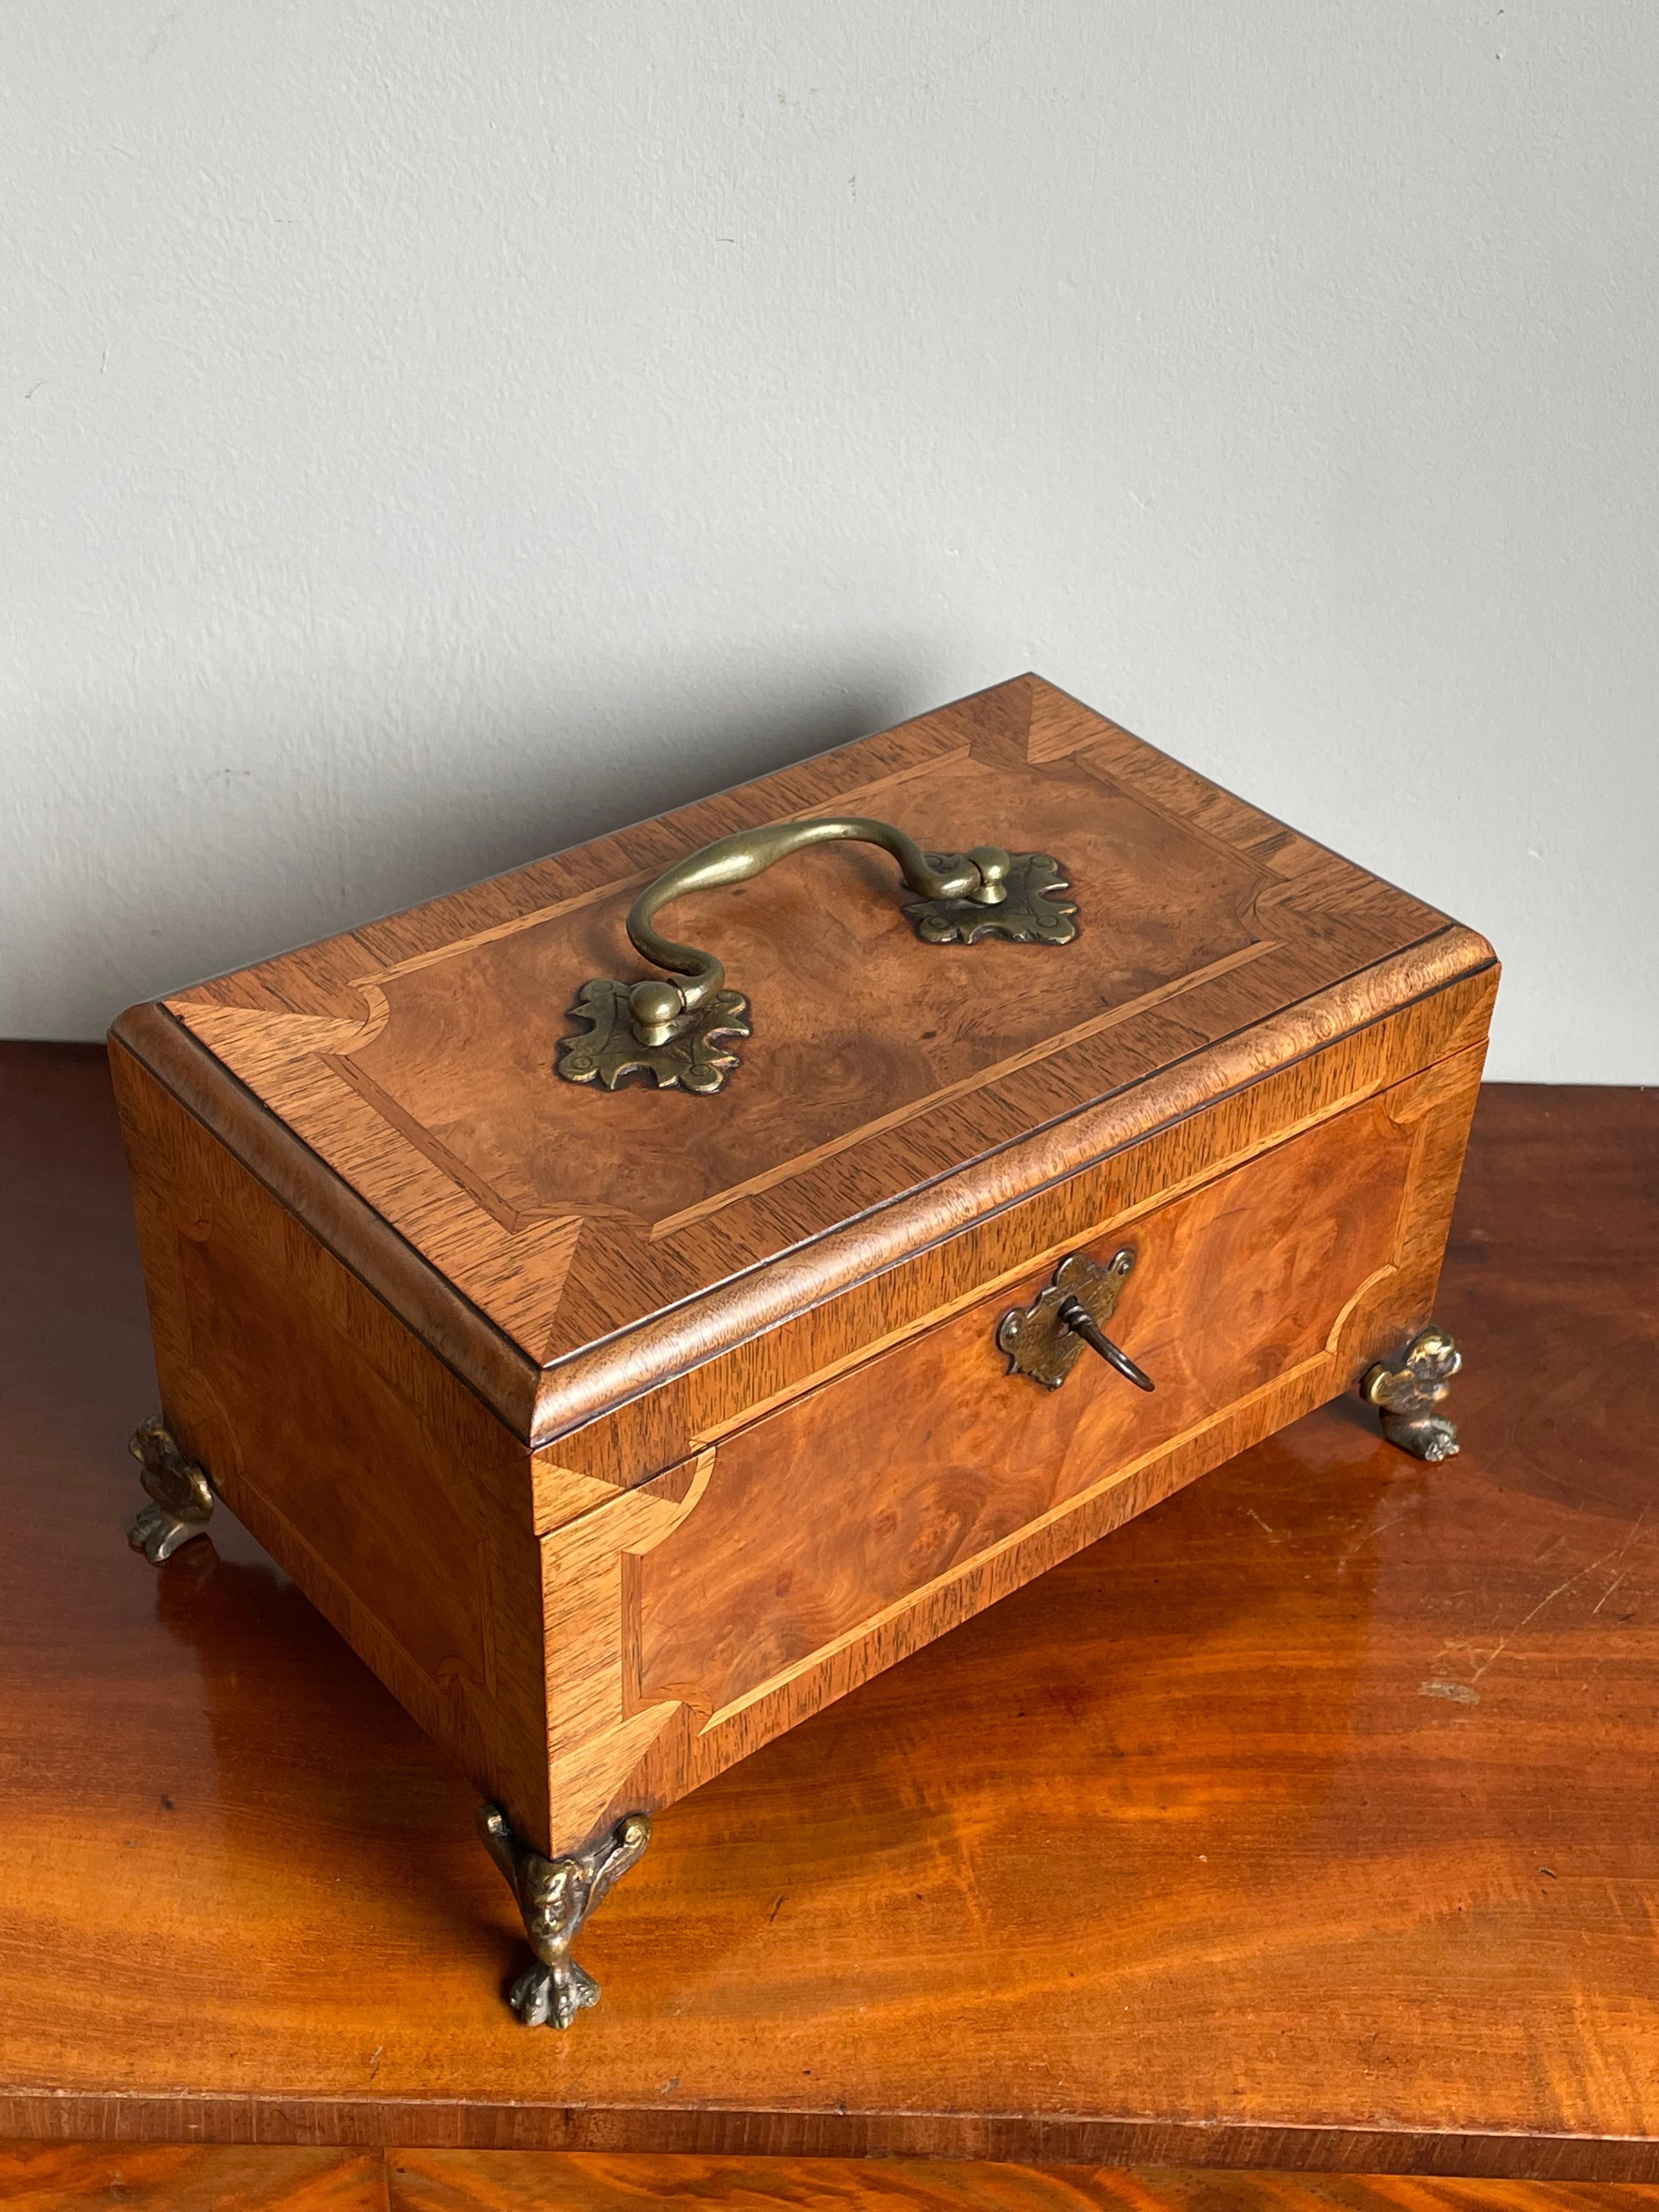 Stunning Late 1800s Walnut, Burl Walnut & Bronze Jewelry Box with a Great Patina 8